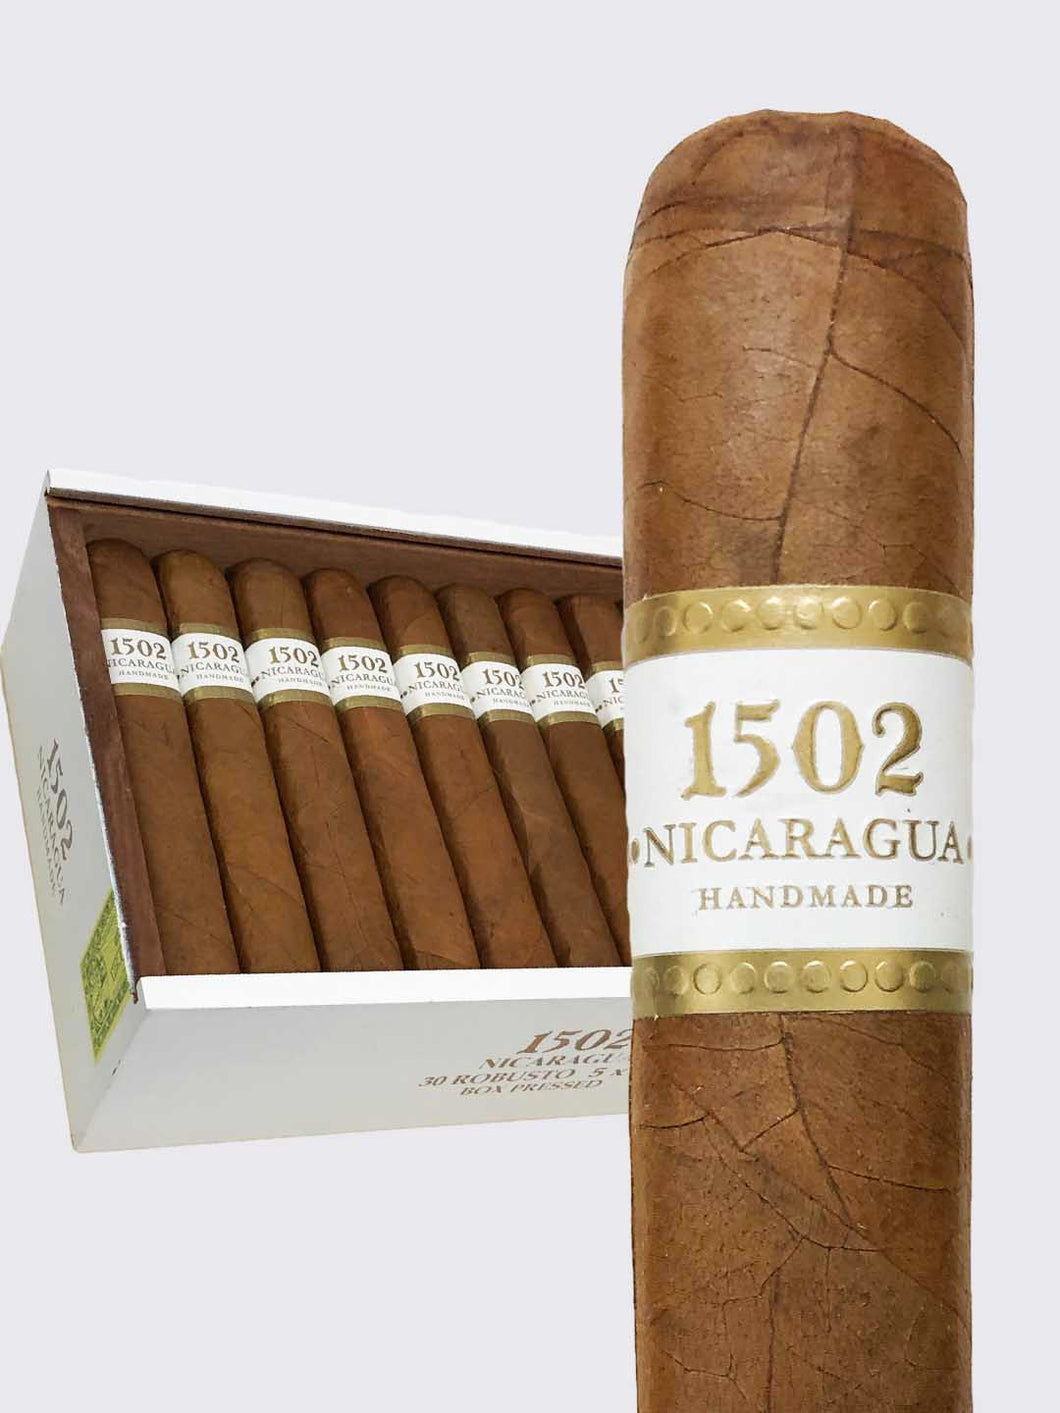 1502 - Nicaragua (Robusto)